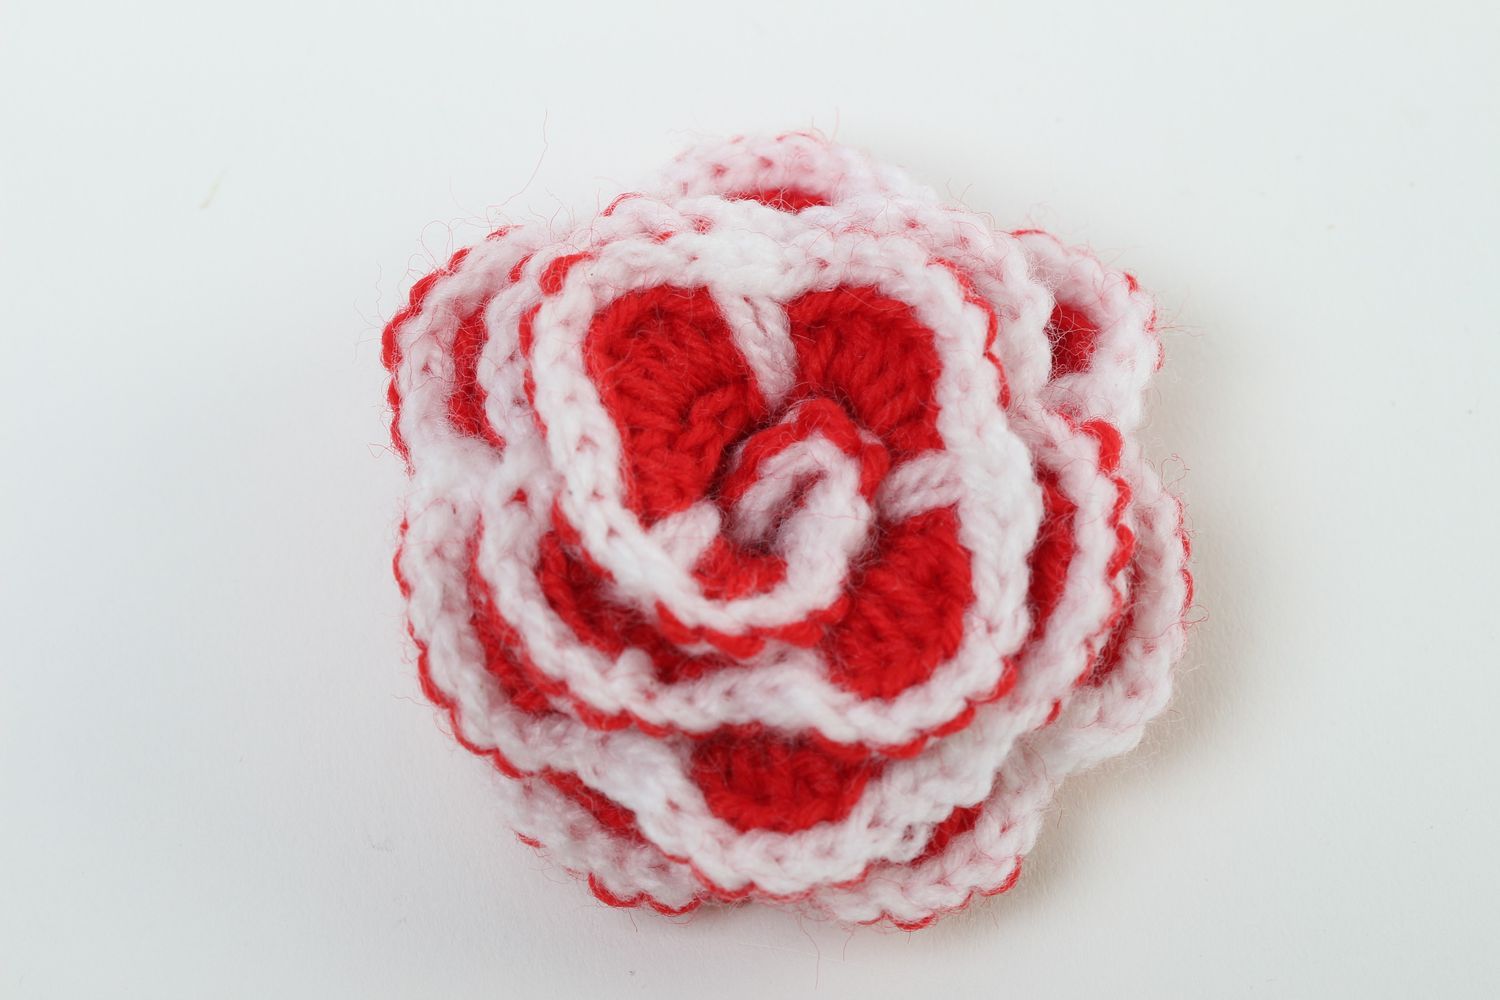 Handmade crocheted flower crochet roses decorative flower jewelry supplies photo 2